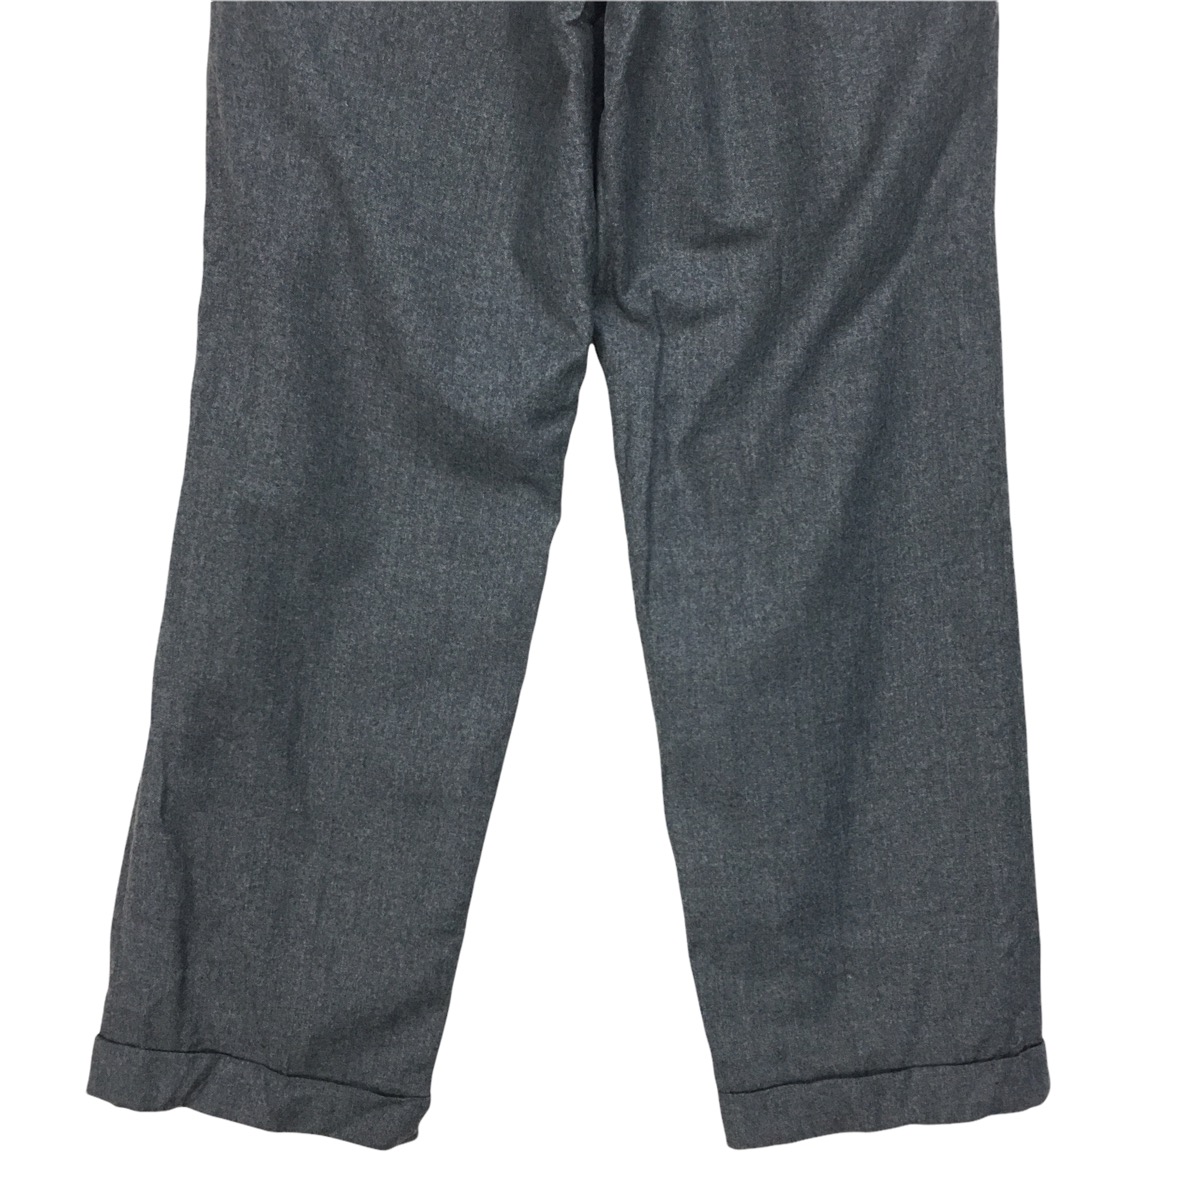 LANVIN COLLECTION Long Pants Trousers Cuff Leg Casual Pants - 6